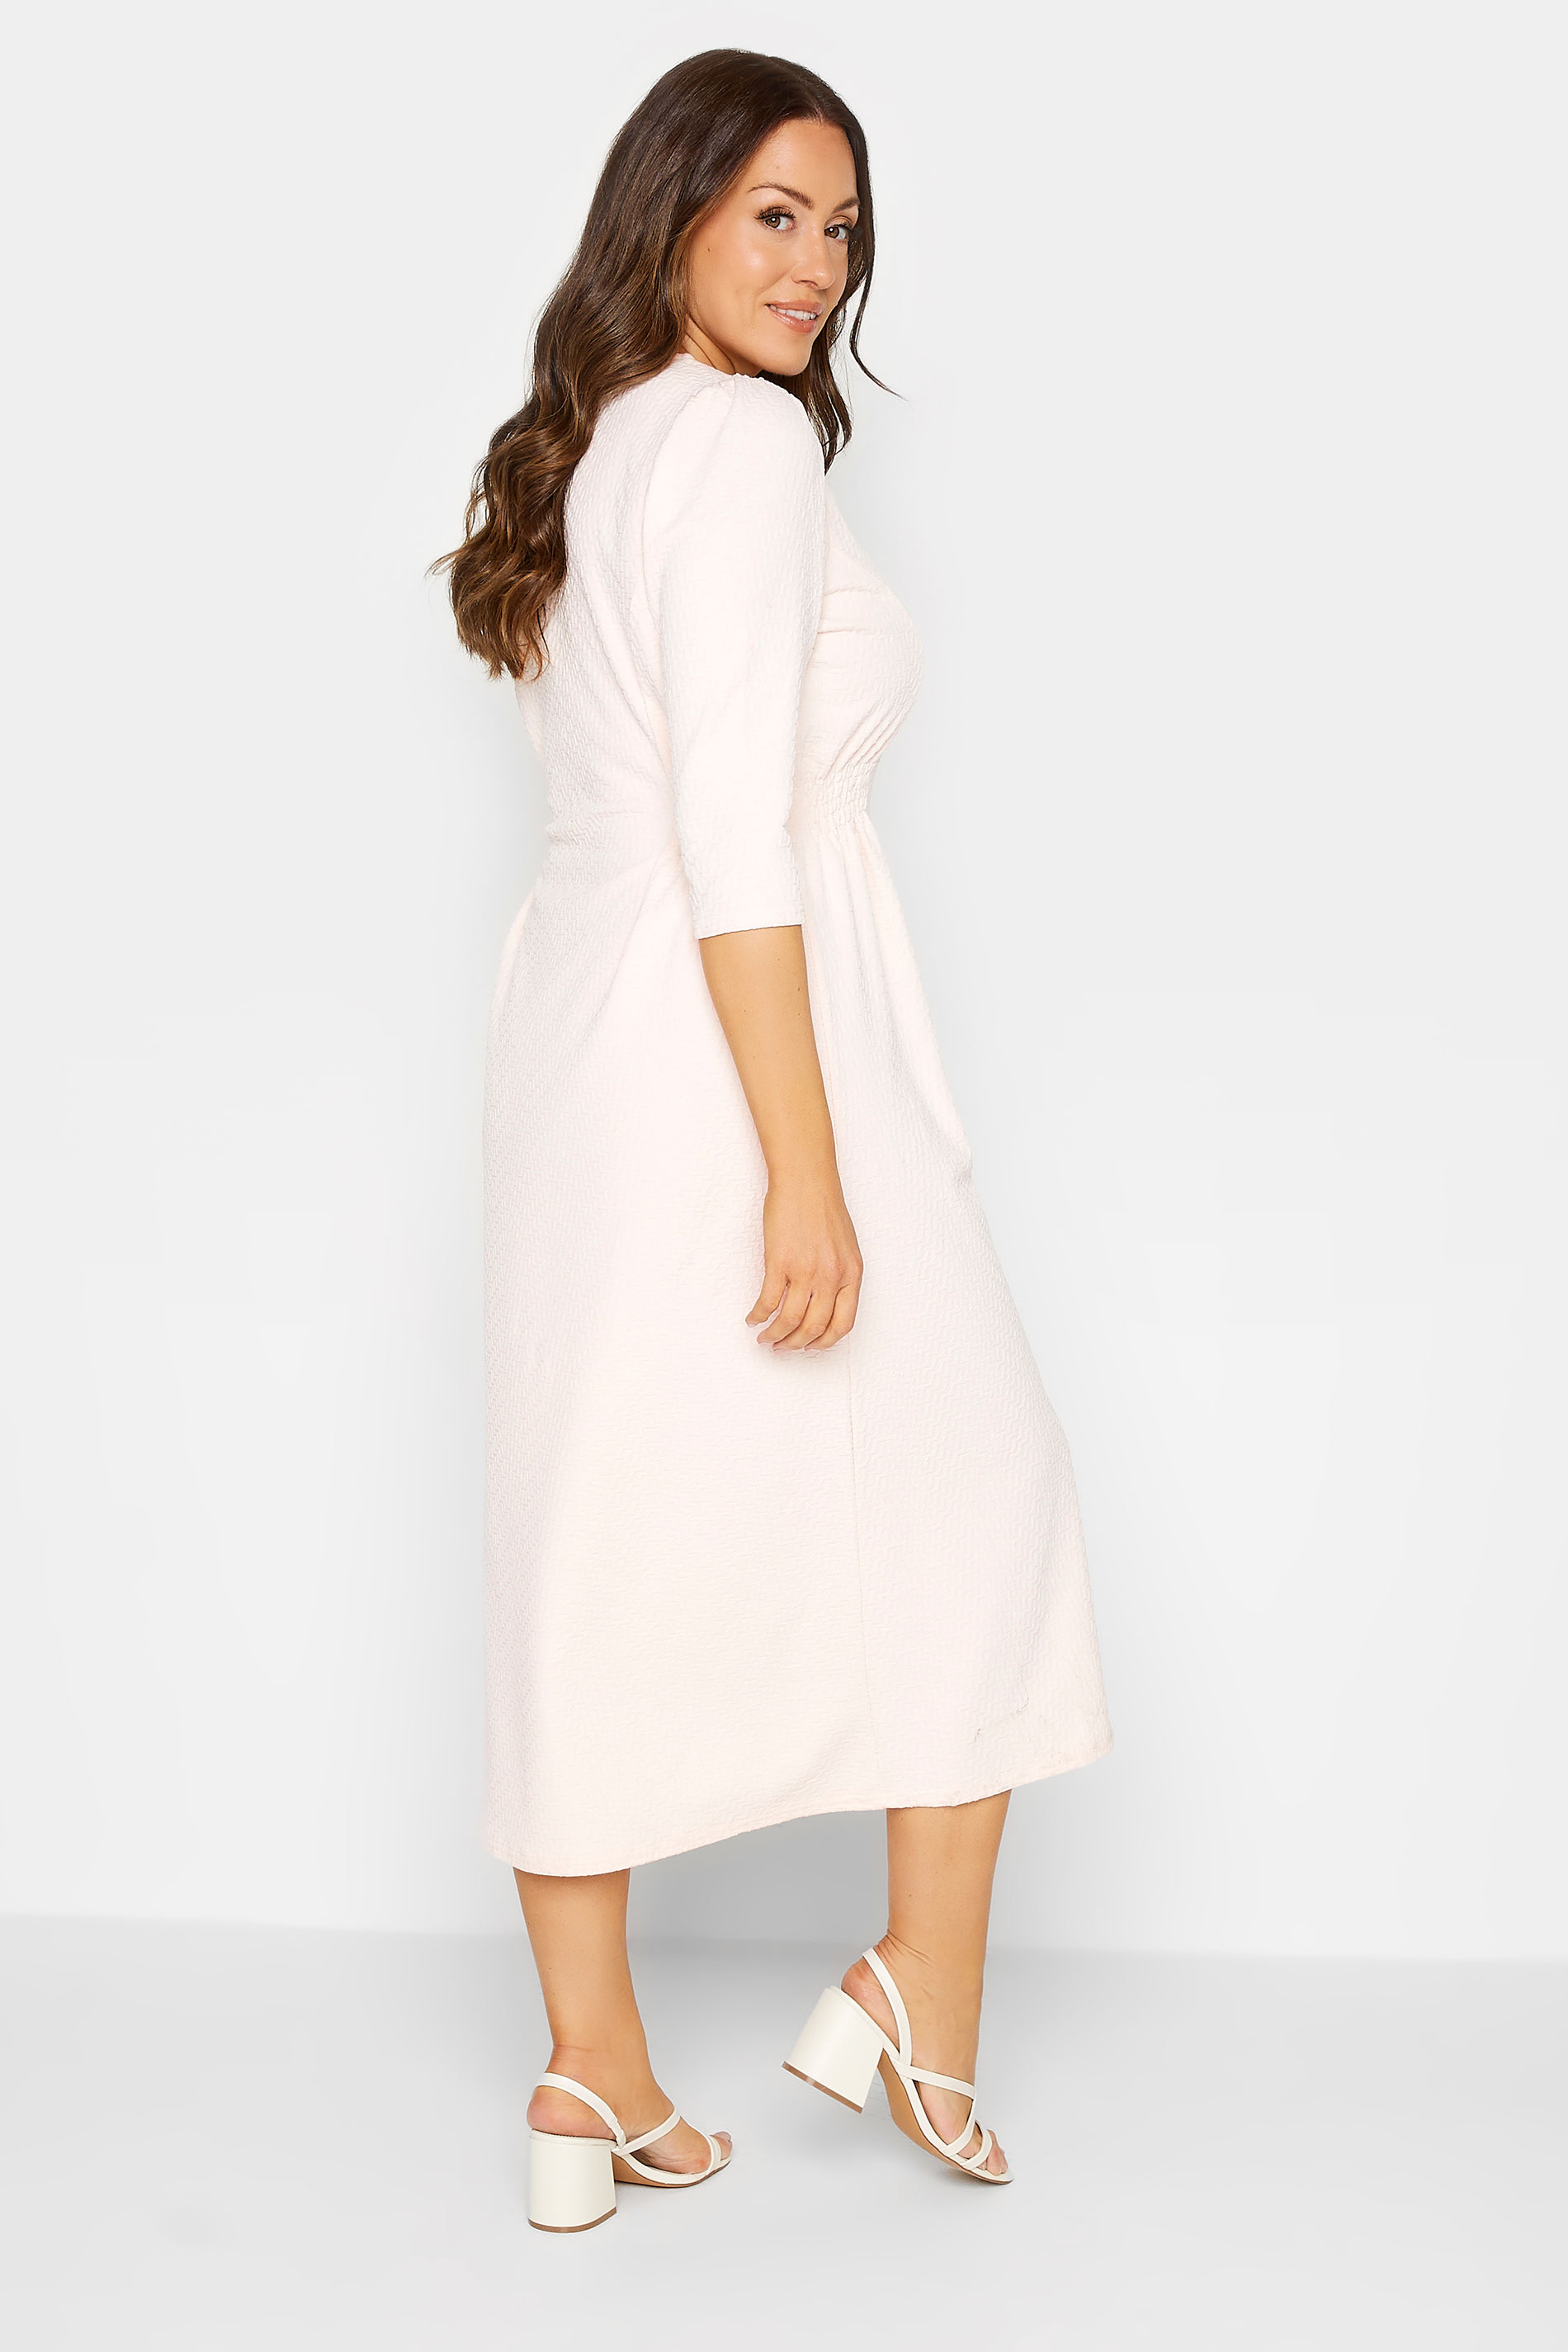 M&Co Pink Textured Button Through Dress | M&Co 3